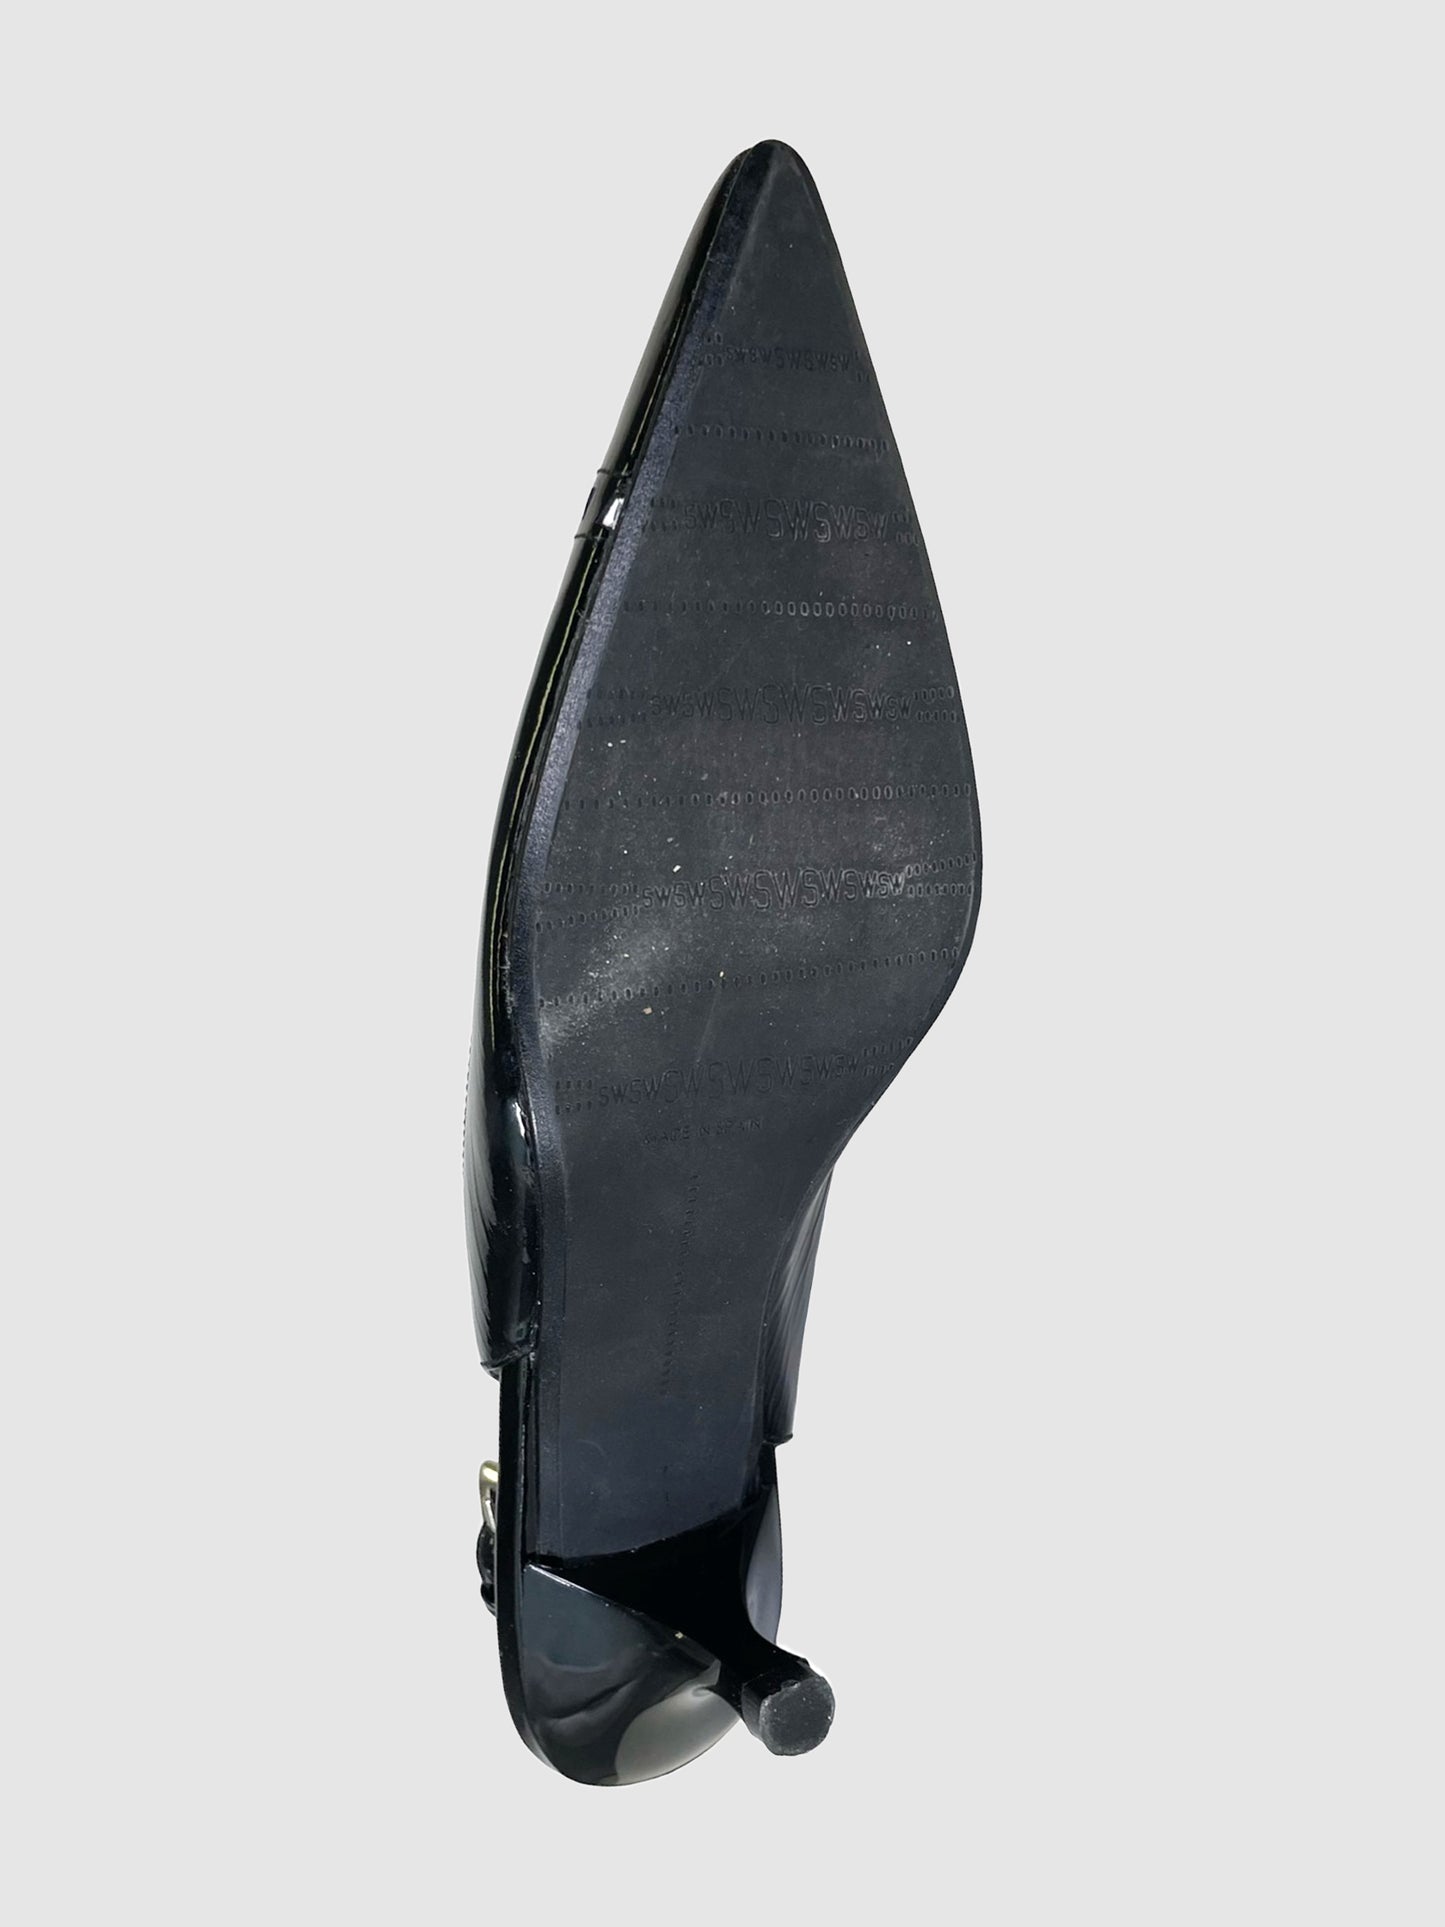 Stuart Weitzman Patent Leather Slingback Pumps - Size 6